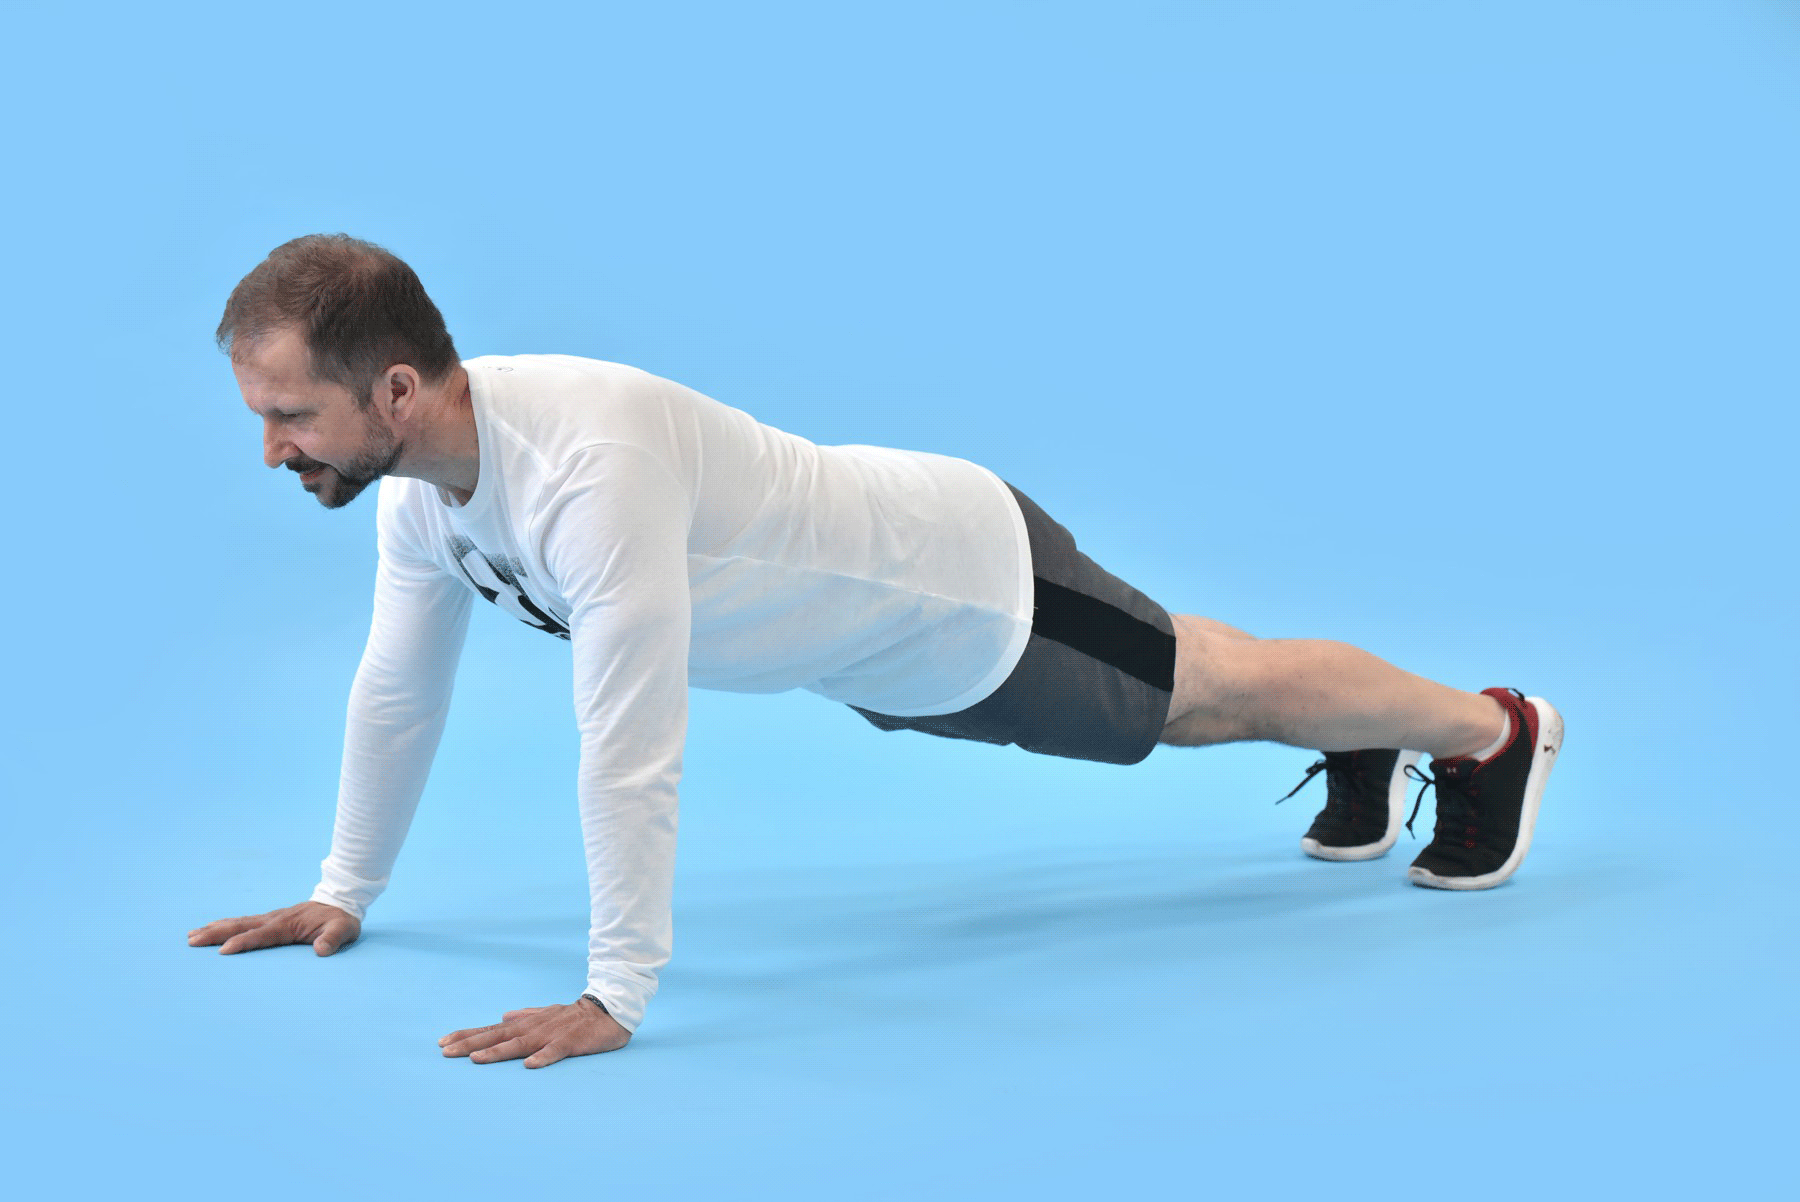 How to do push-ups correctly